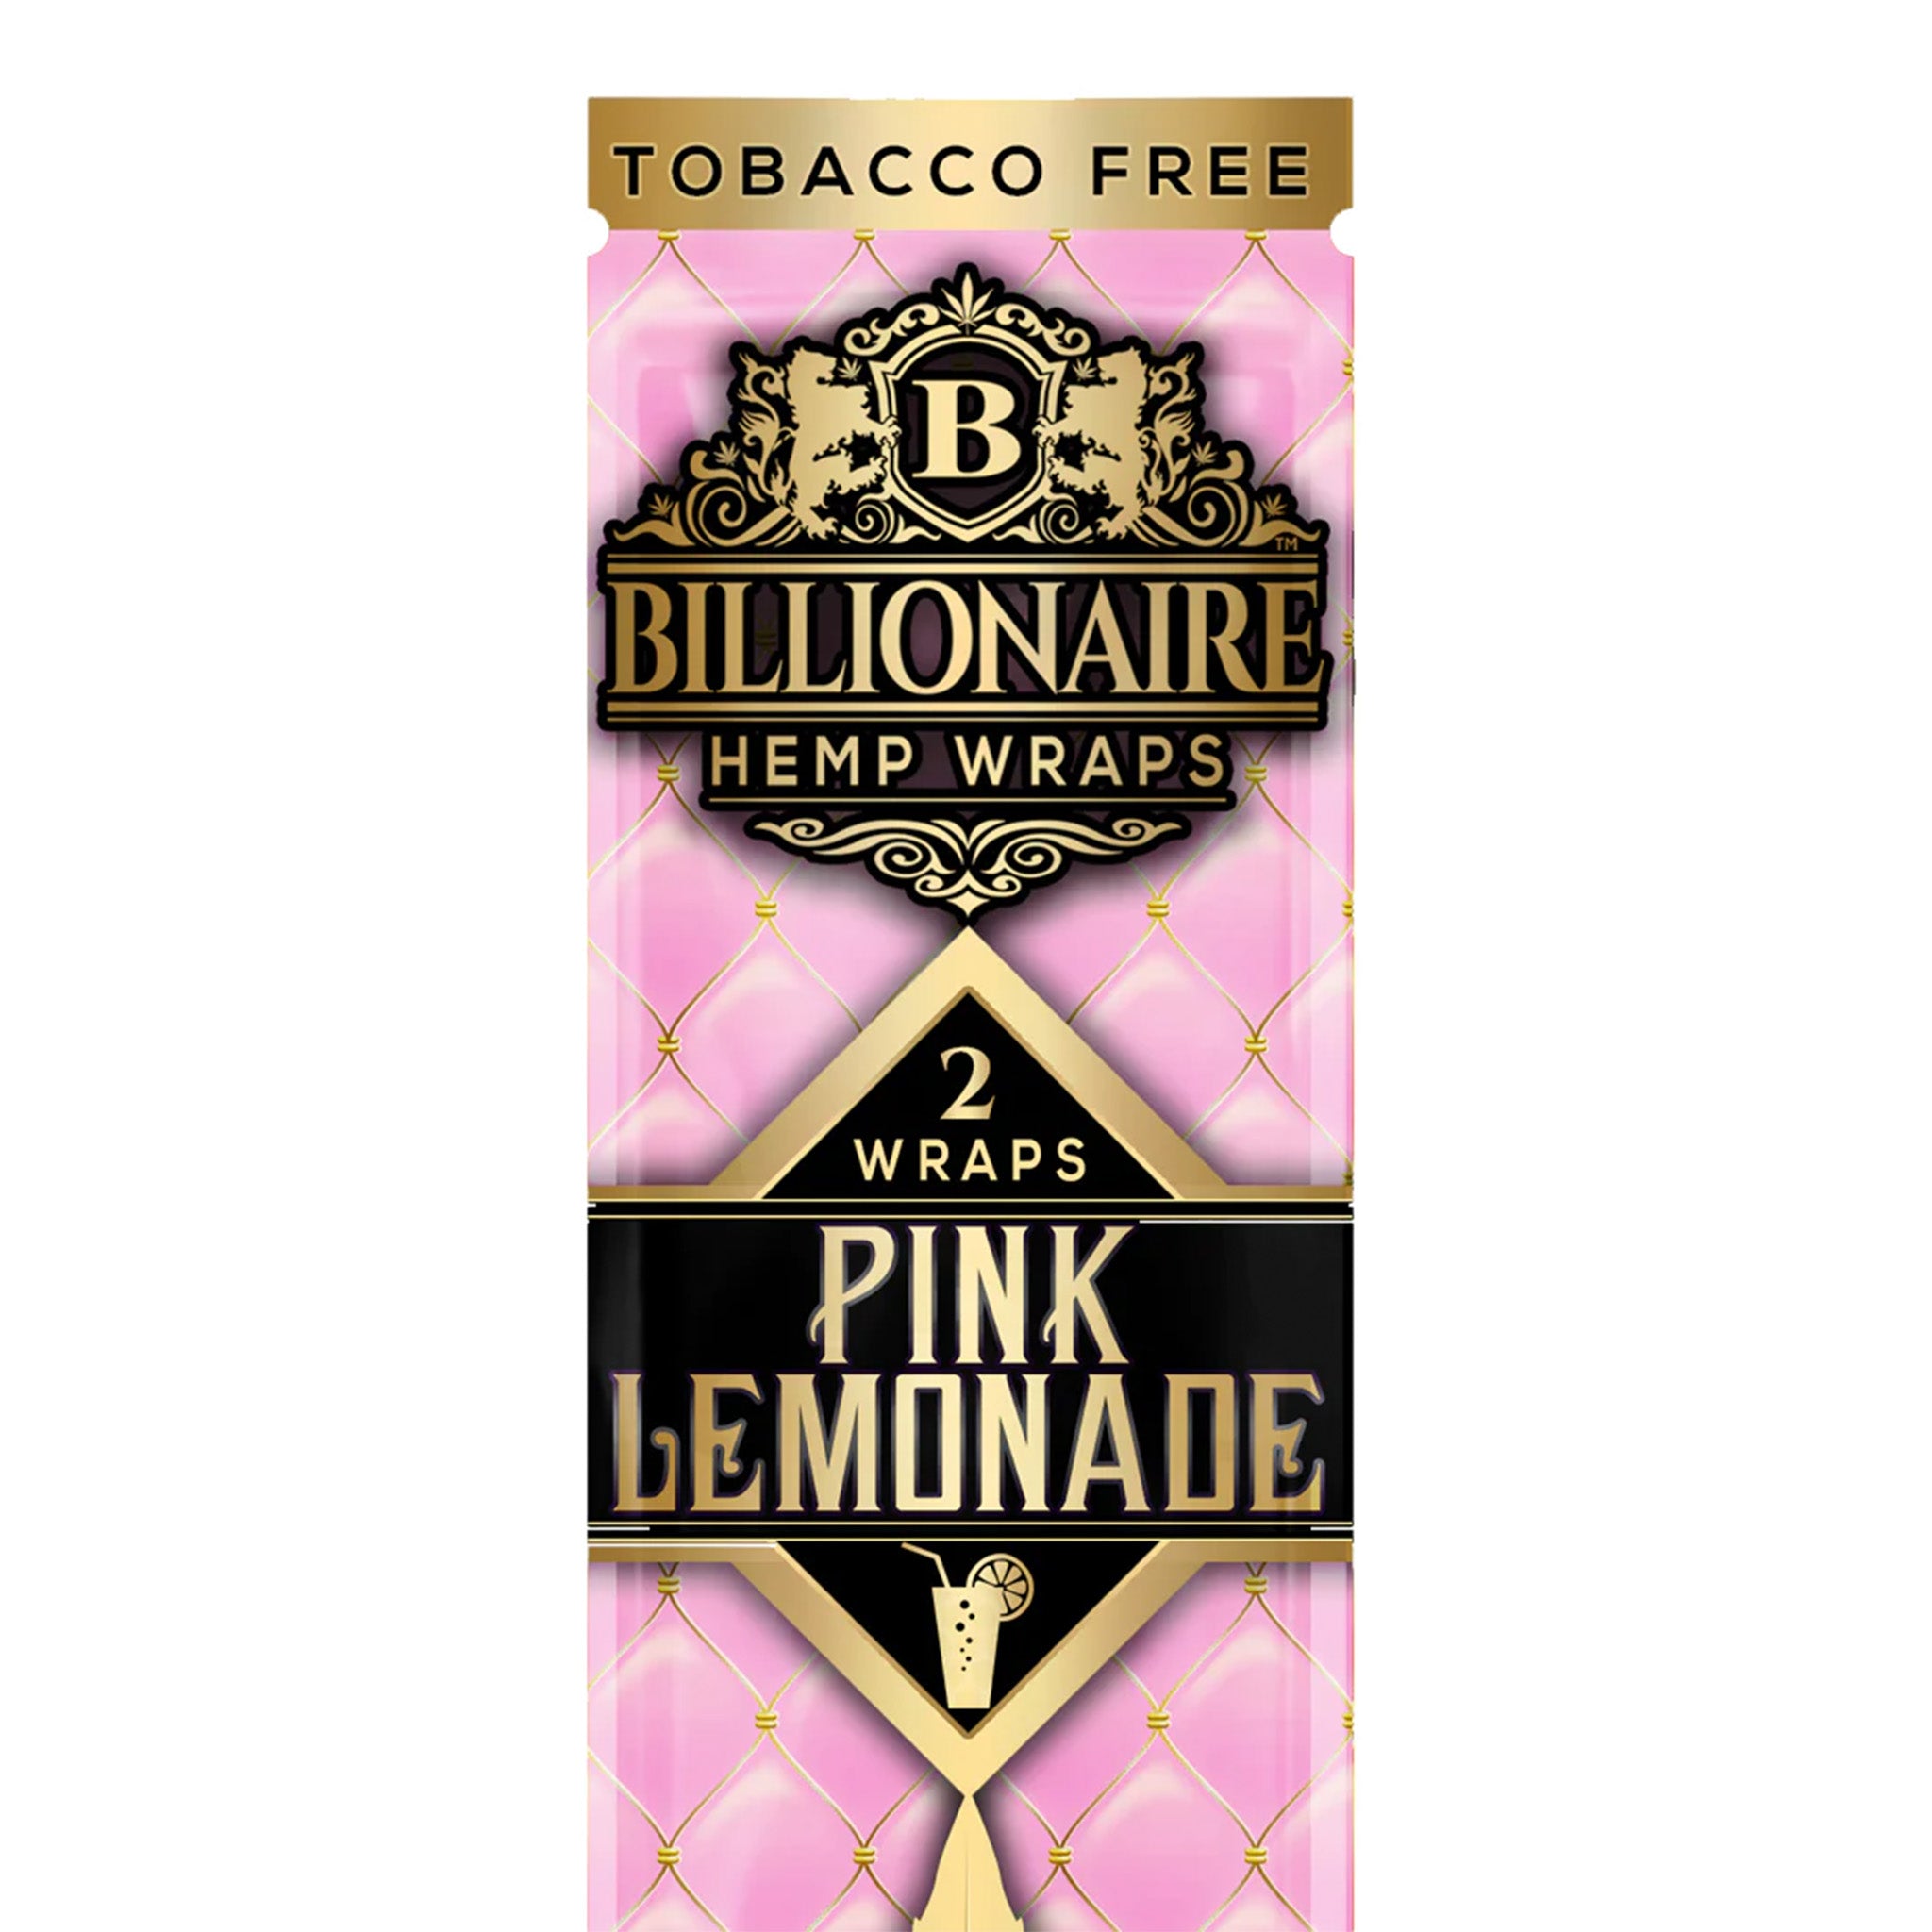 Billionaire Hemp Wraps - Two Packs Rolling Papers Ultimate Brands Pink Lemonade 